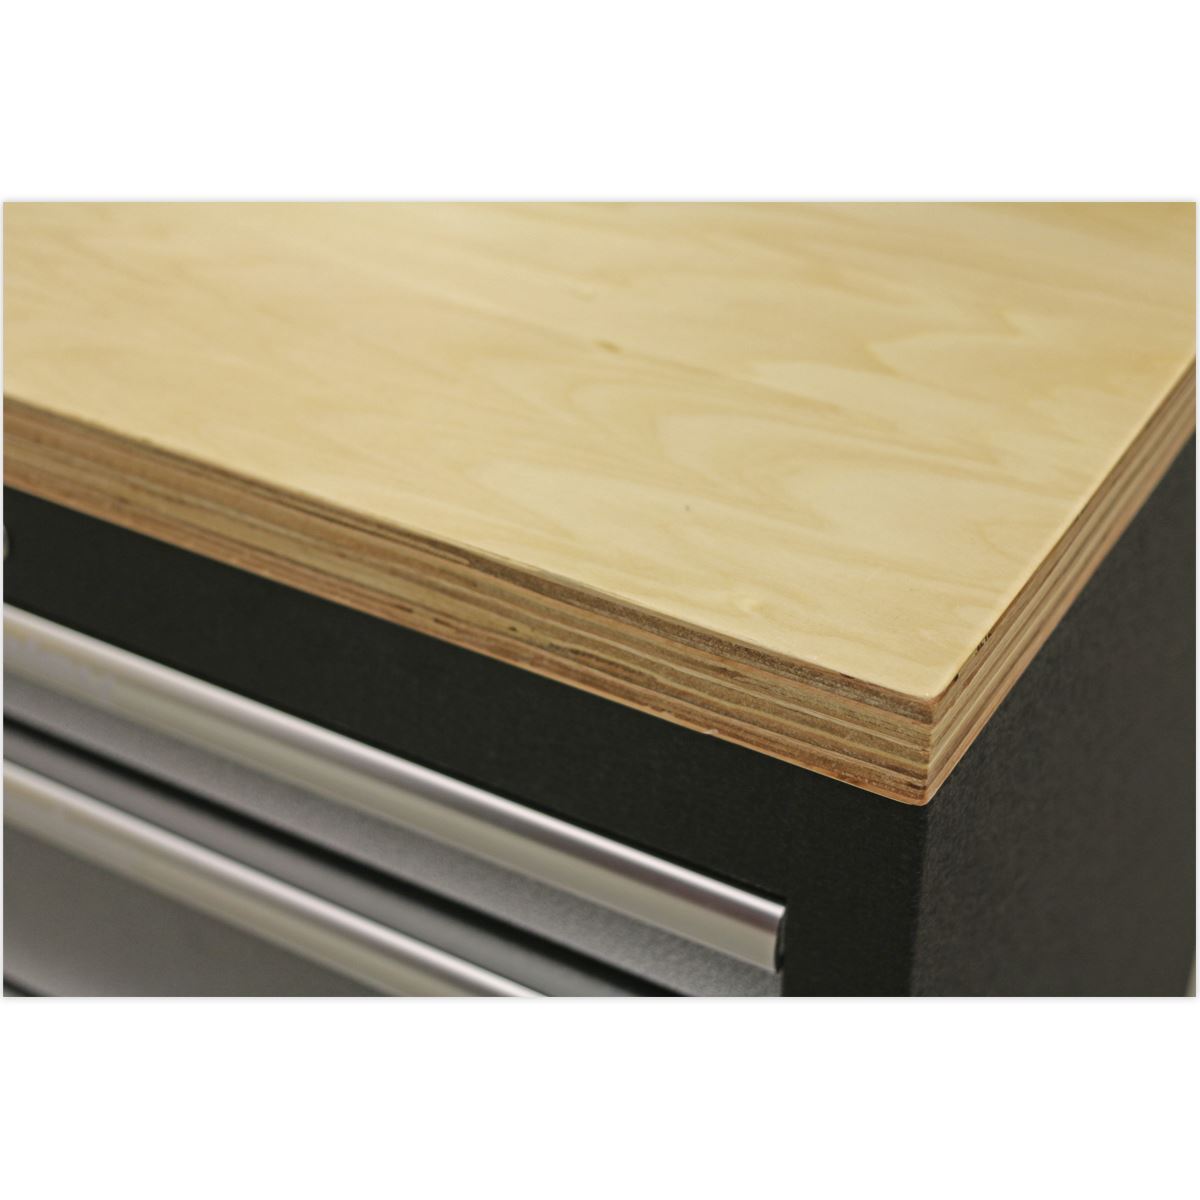 Sealey Superline Pro Pressed Wood Worktop 680mm